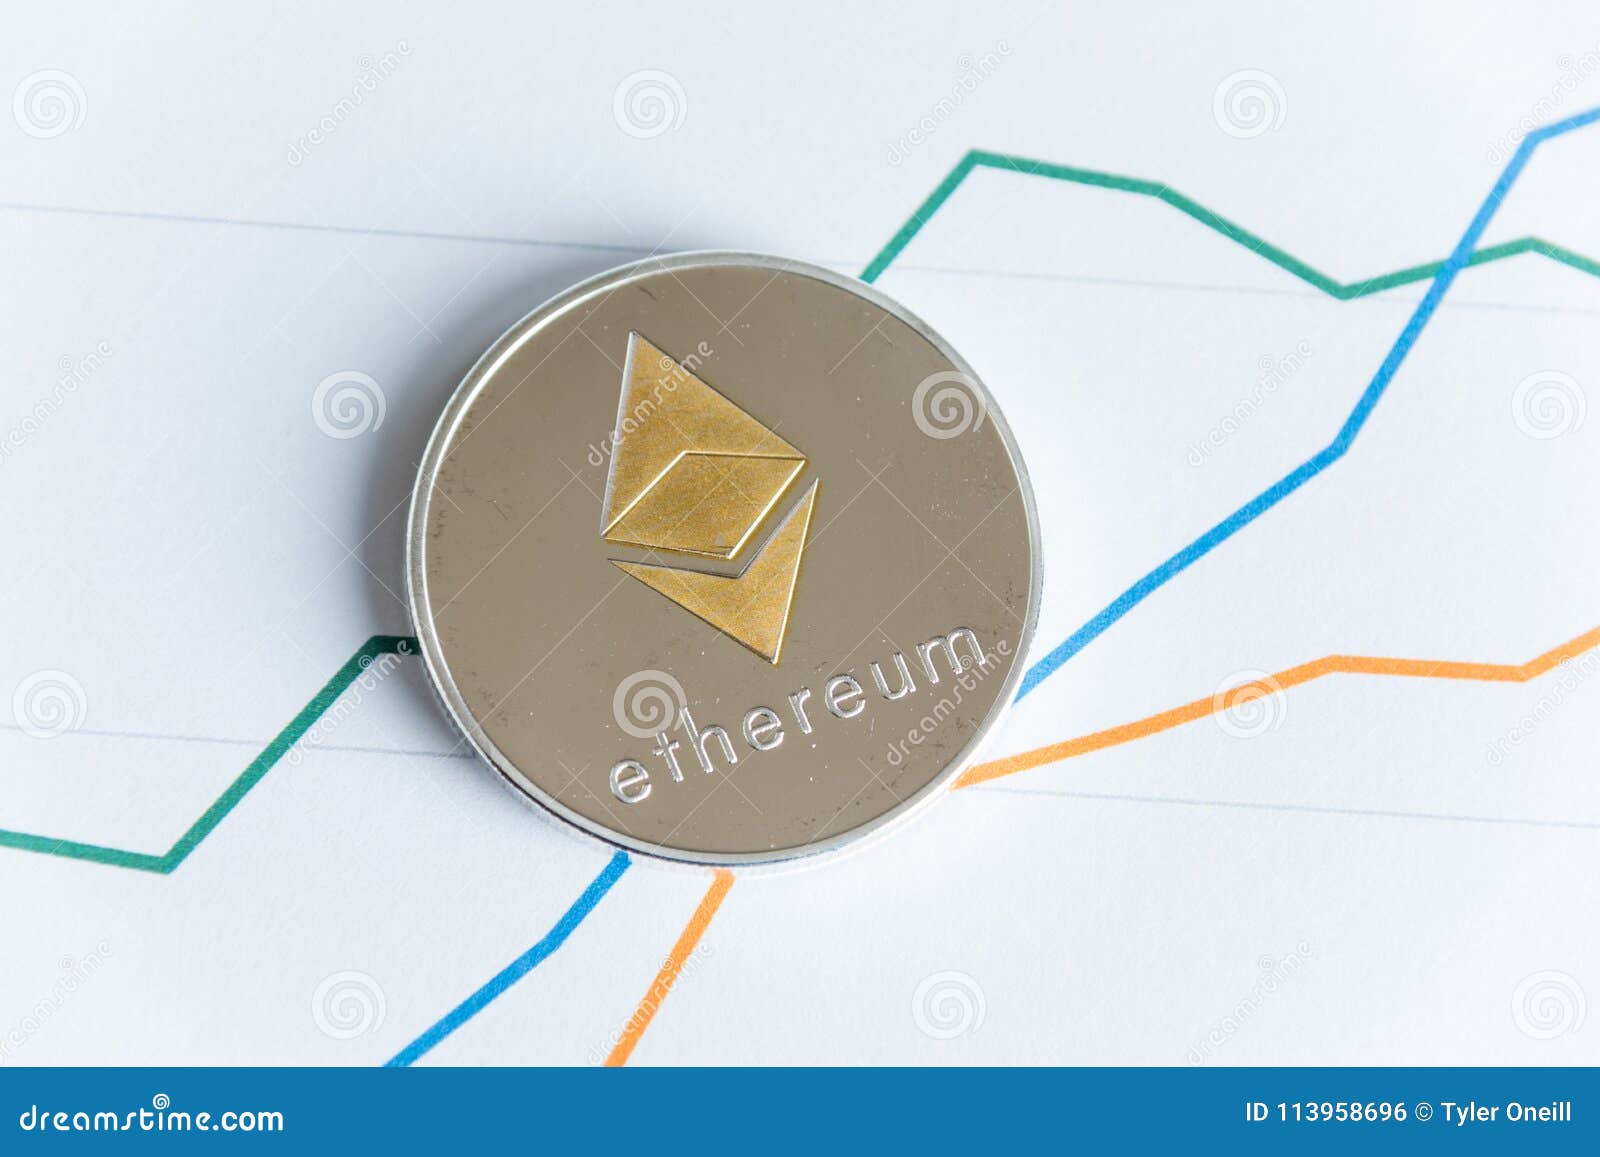 Ethereum Trading Chart